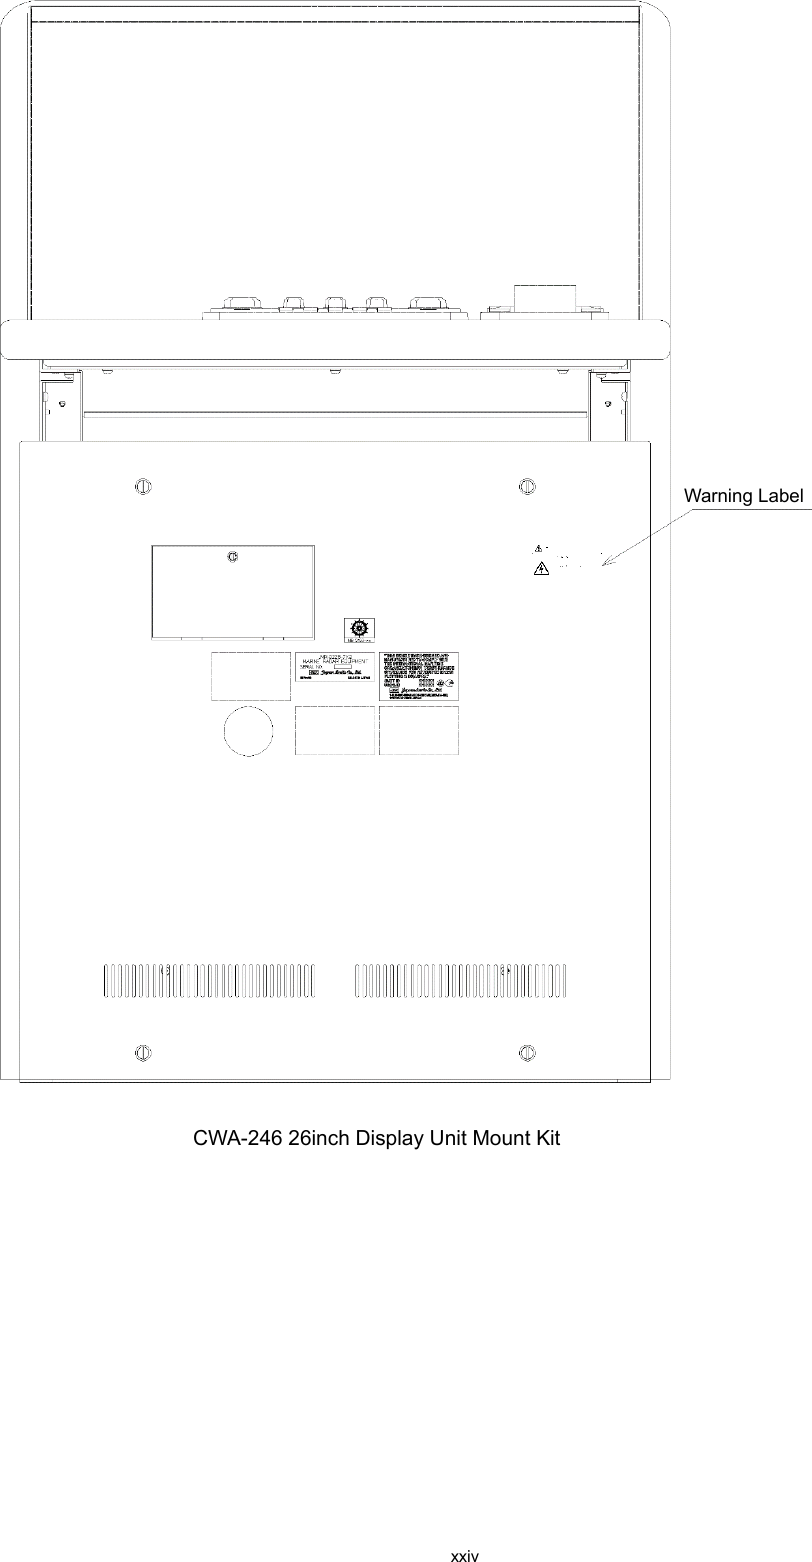  xxiv   CWA-246 26inch Display Unit Mount Kit     Warning Label  